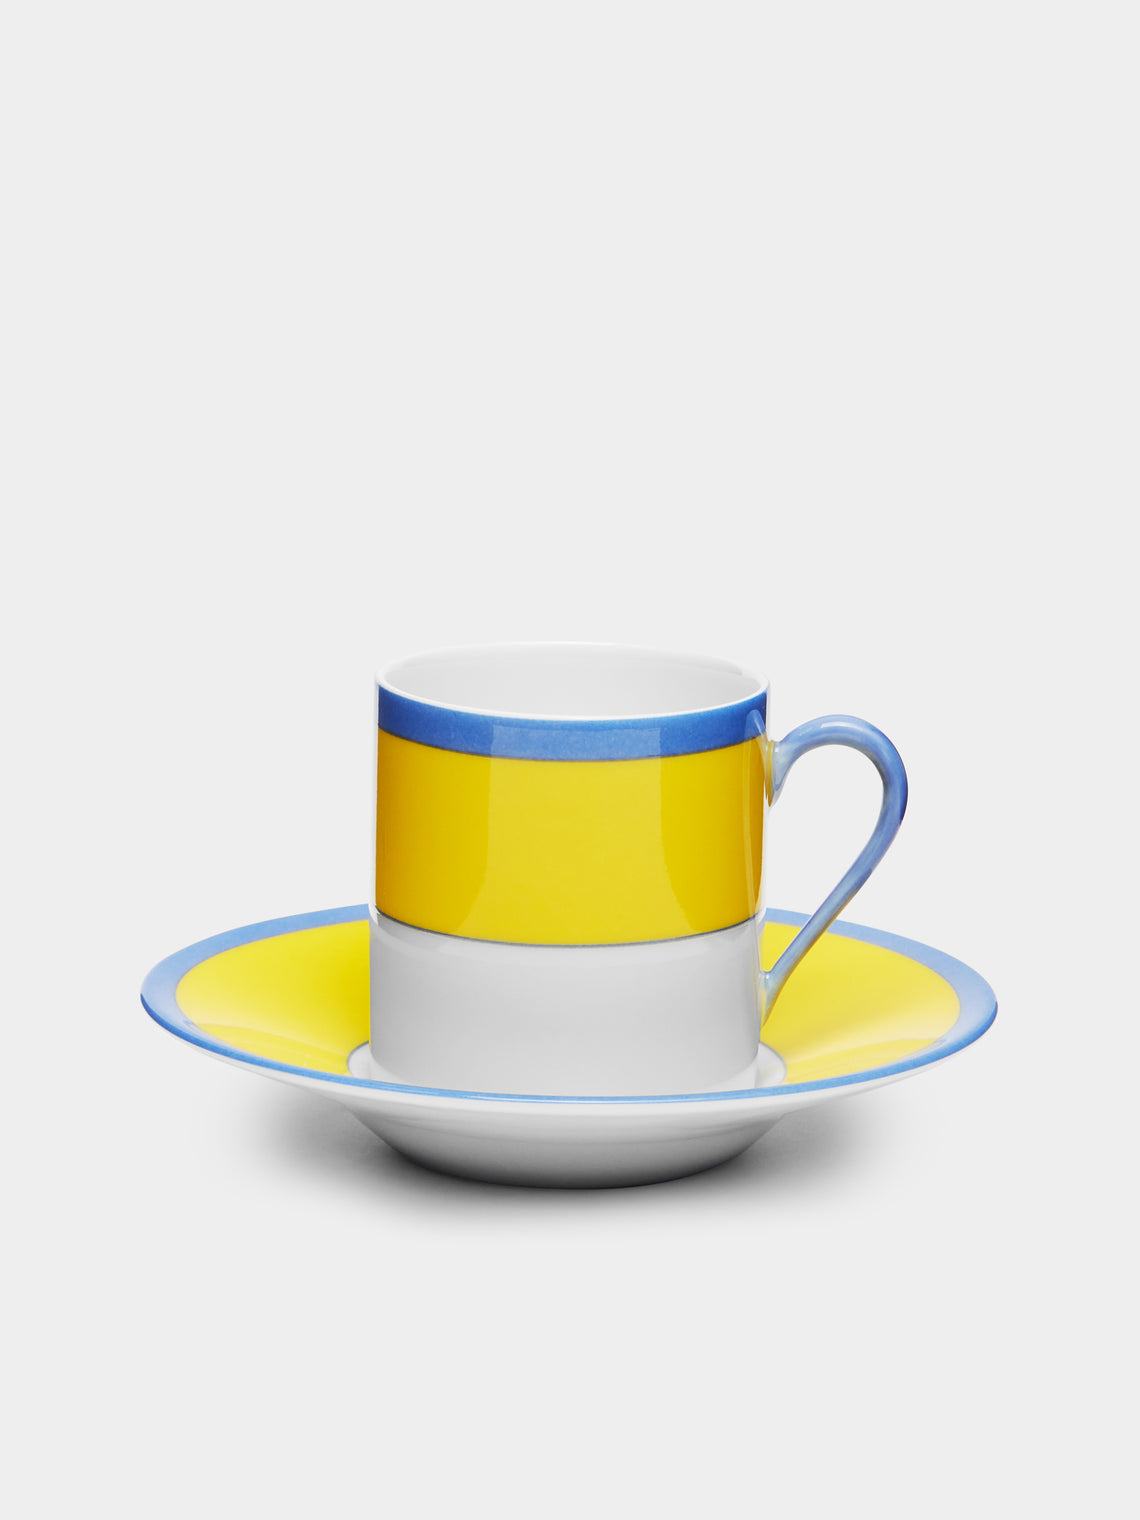 Robert Haviland & C. Parlon - Monet Porcelain Coffee Cup and Saucer -  - ABASK - 